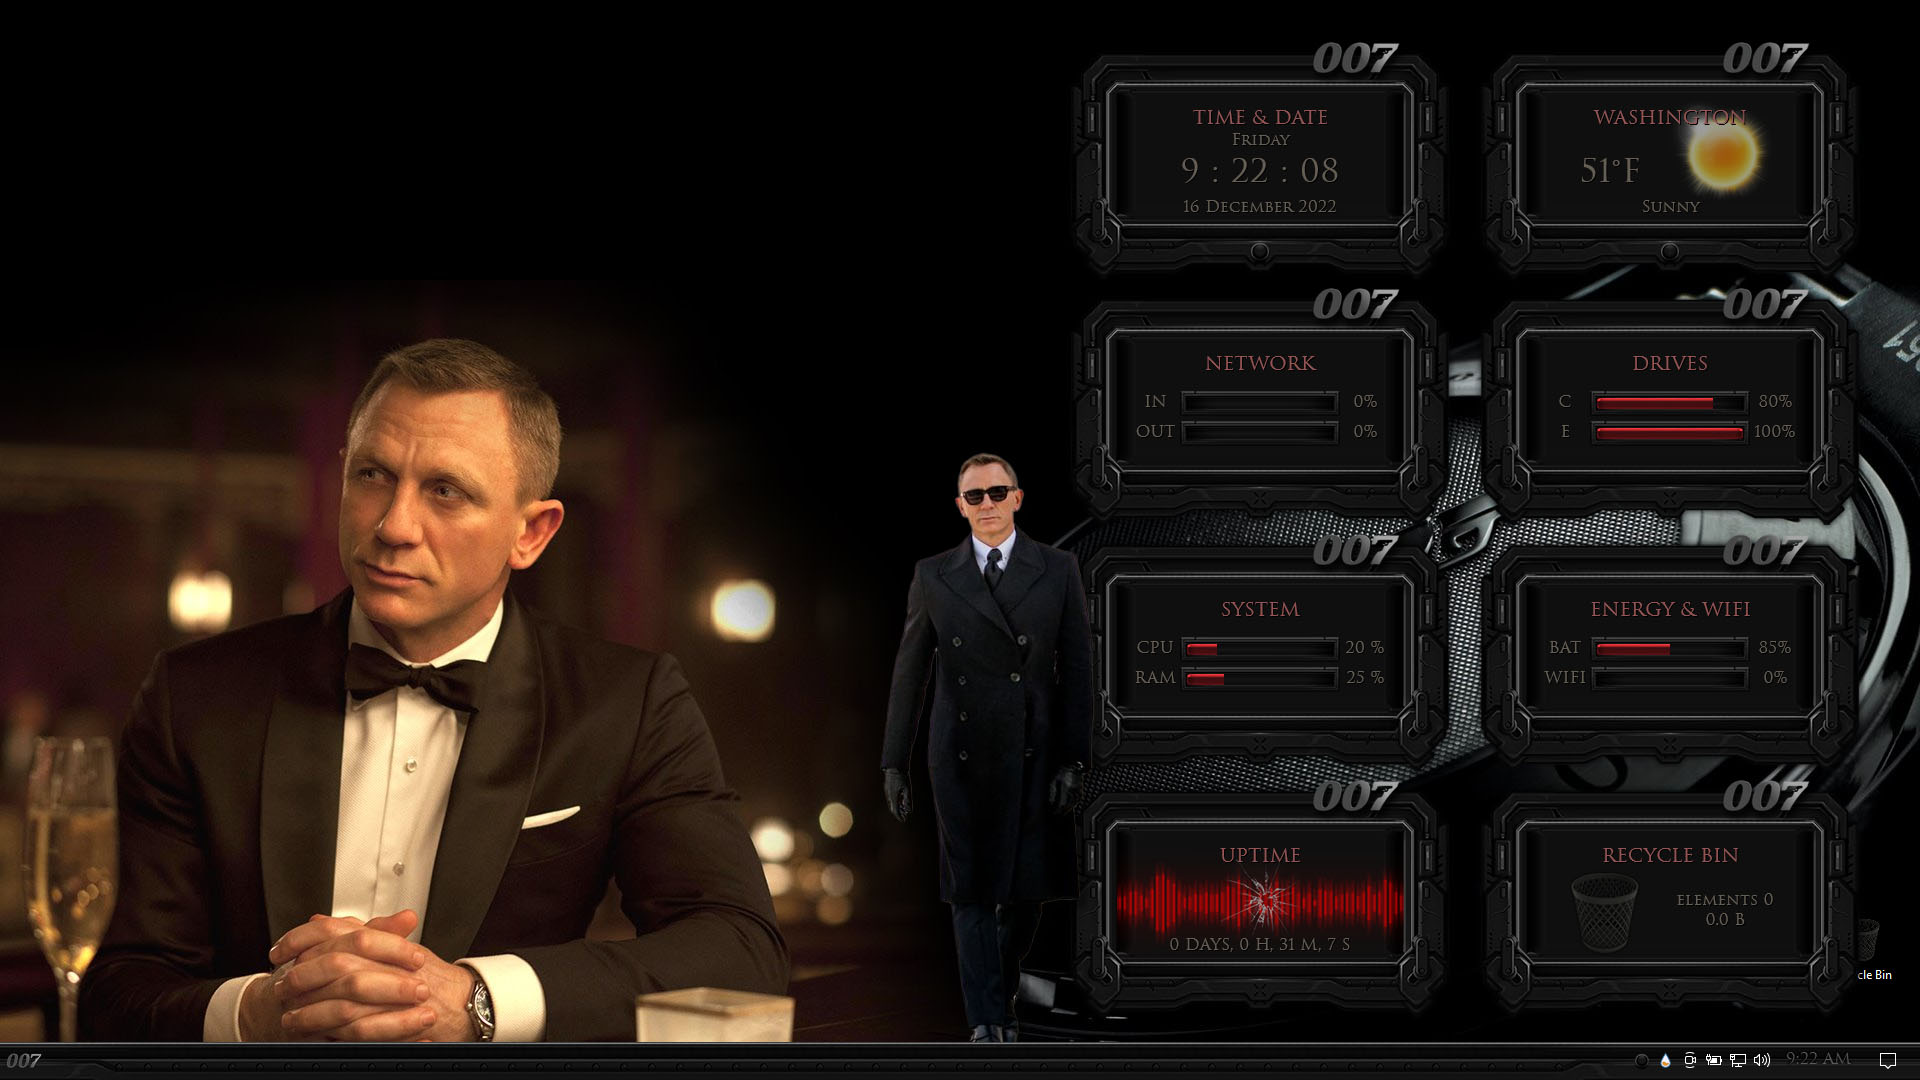 James Bond 007 Premium SkinPack for Windows 10